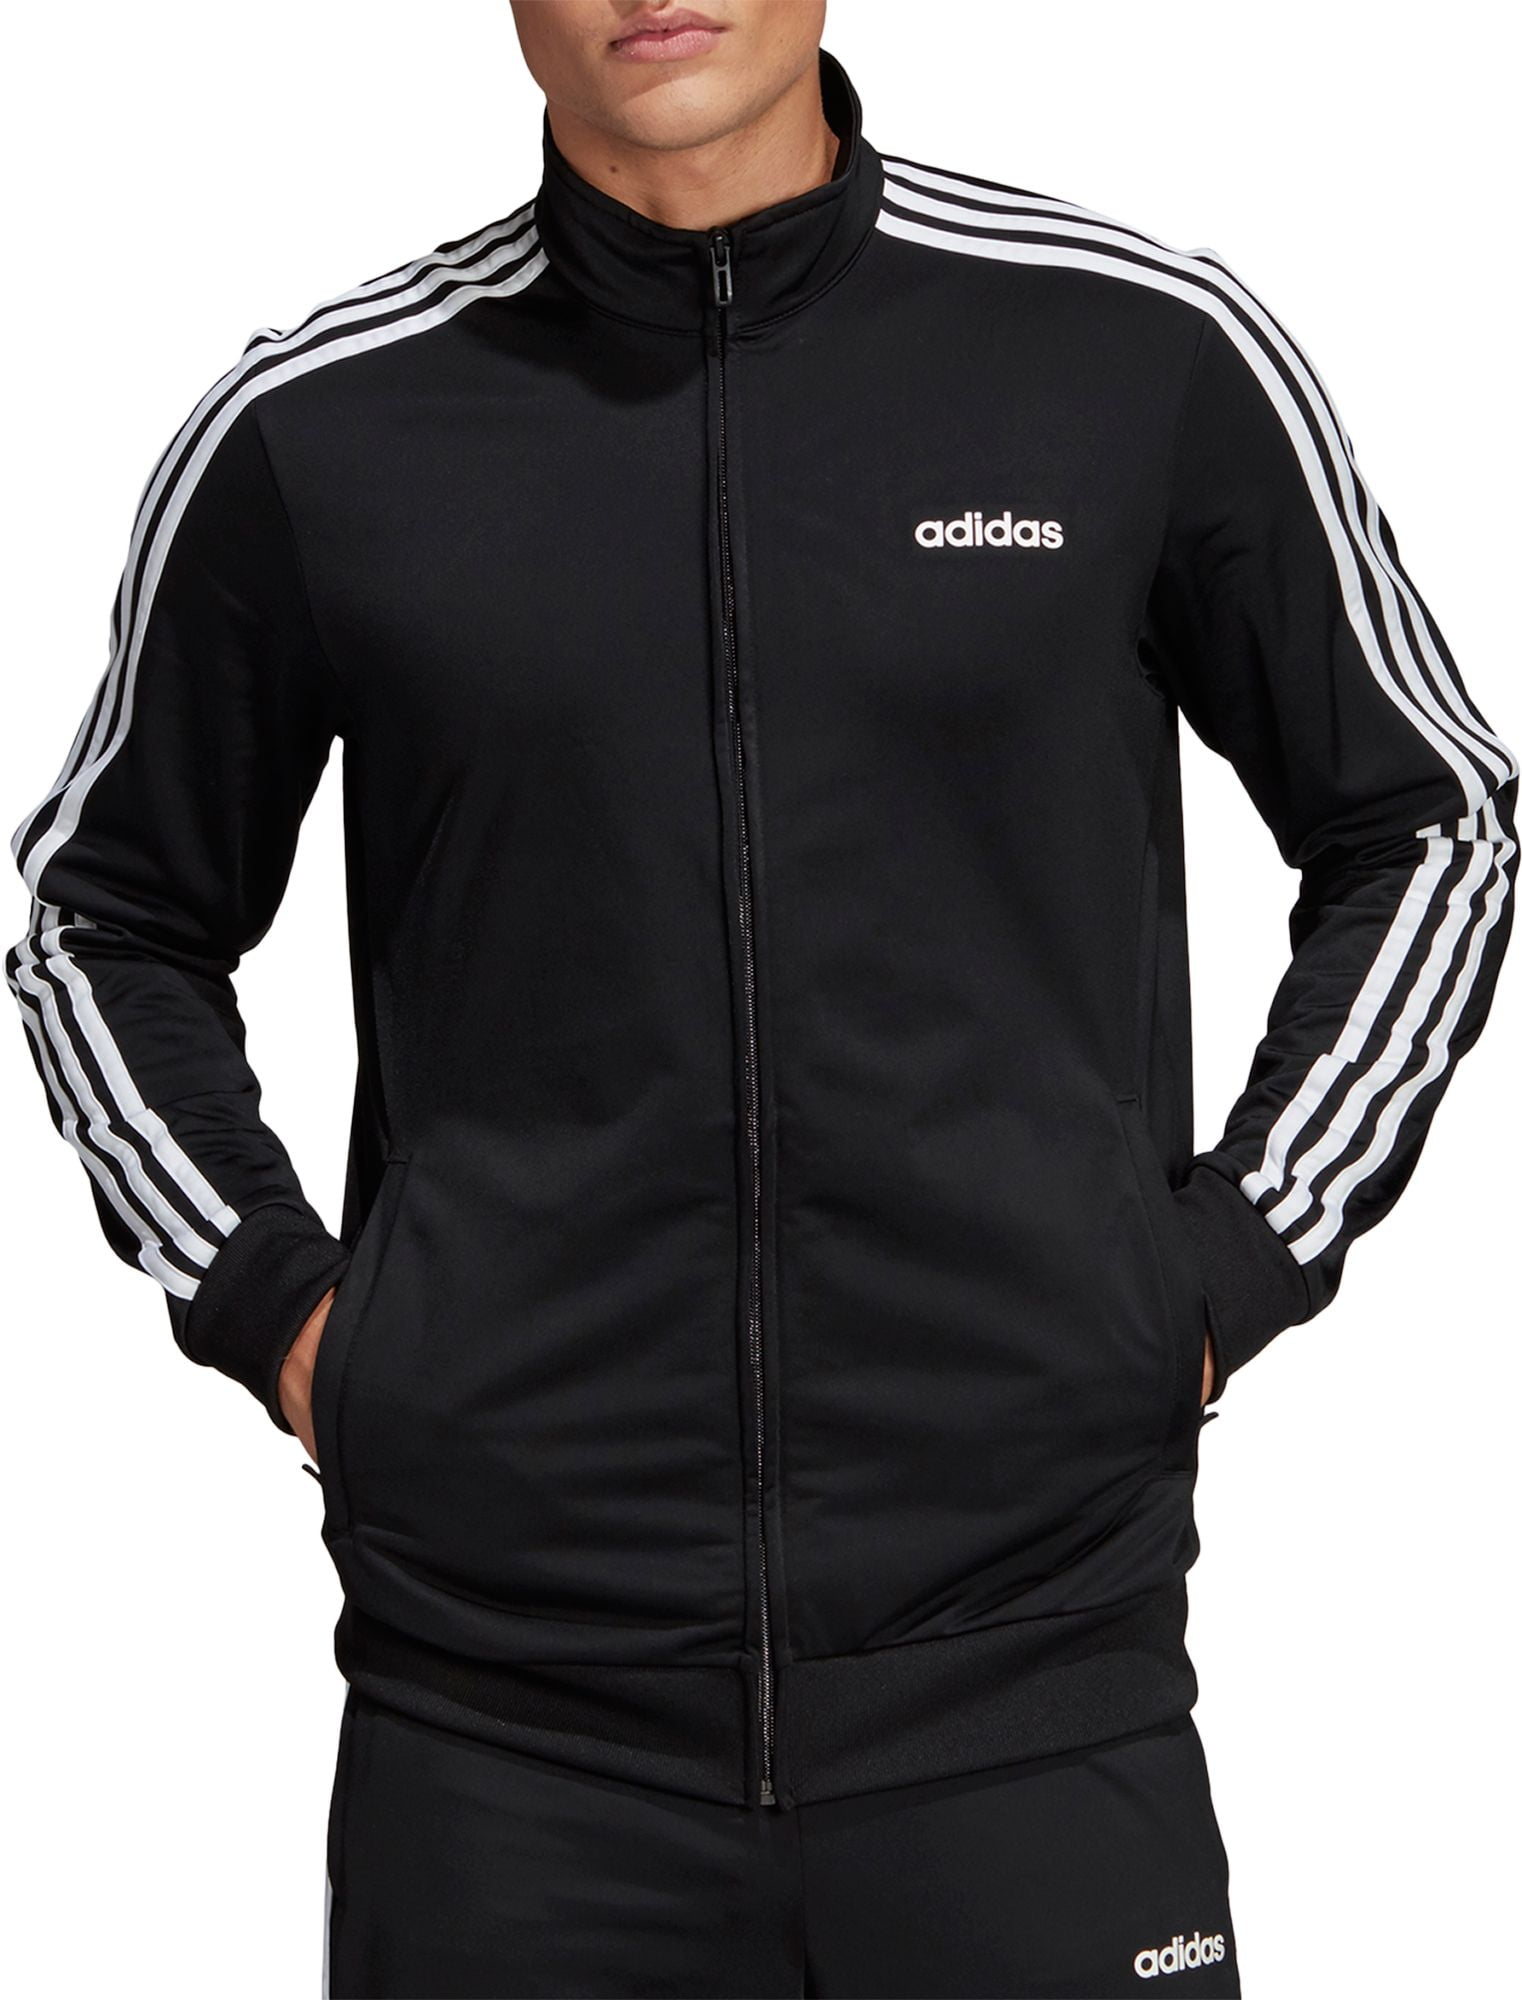 adidas Men's Essentials 3-Stripes Tricot Track Jacket, Black/White